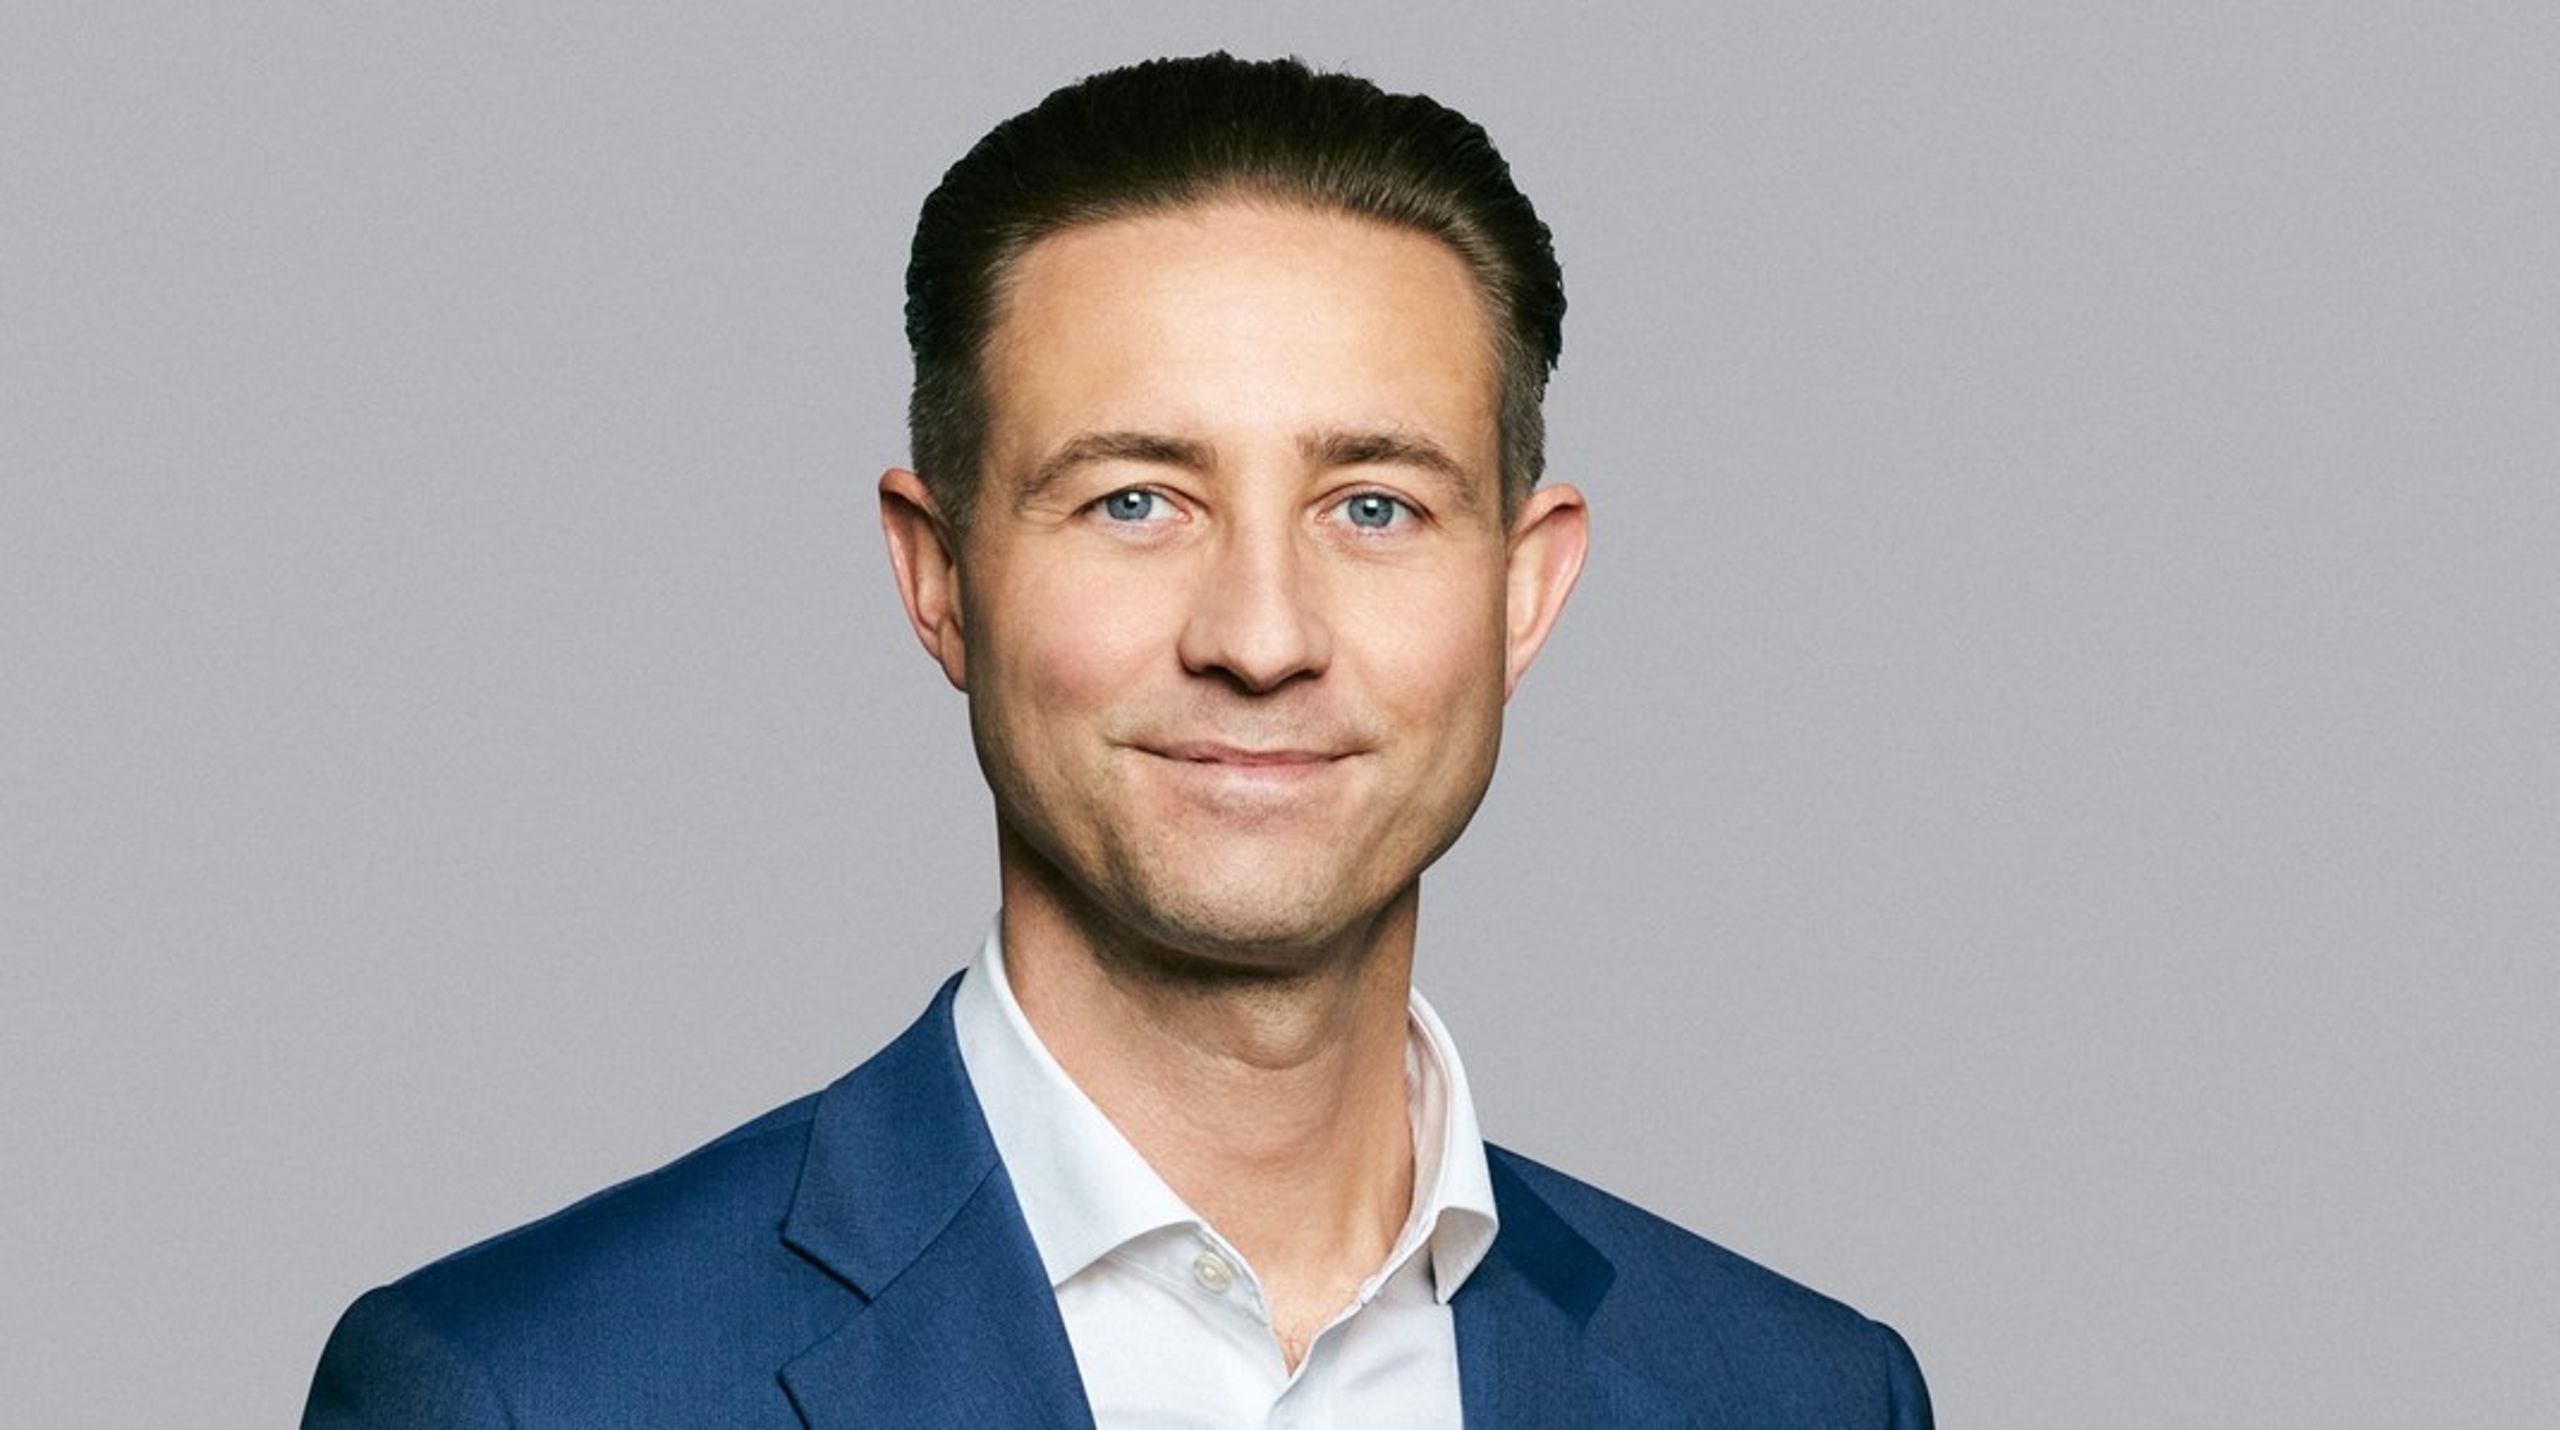 Jakob Thune bliver ny kommunaldirektør i Hvidovre fra august 2022.